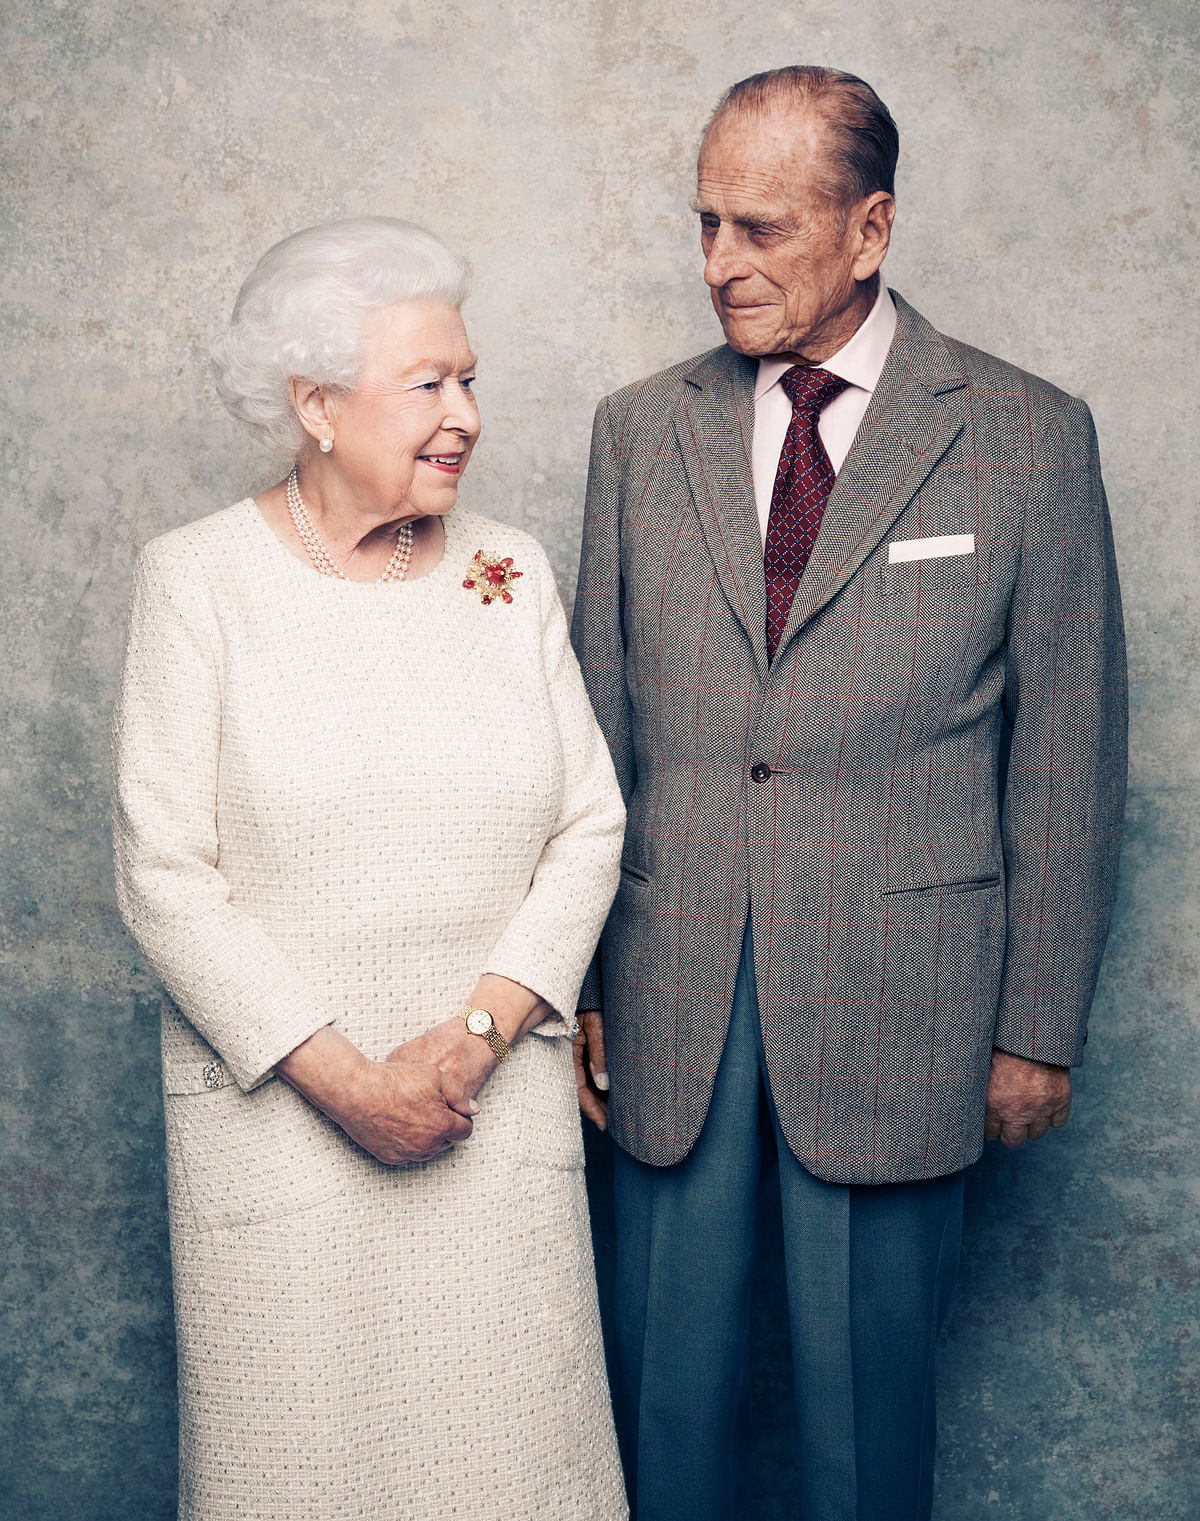  Now 91, Queen Elizabeth II is the first British monarch to reach a platinum anniversary.